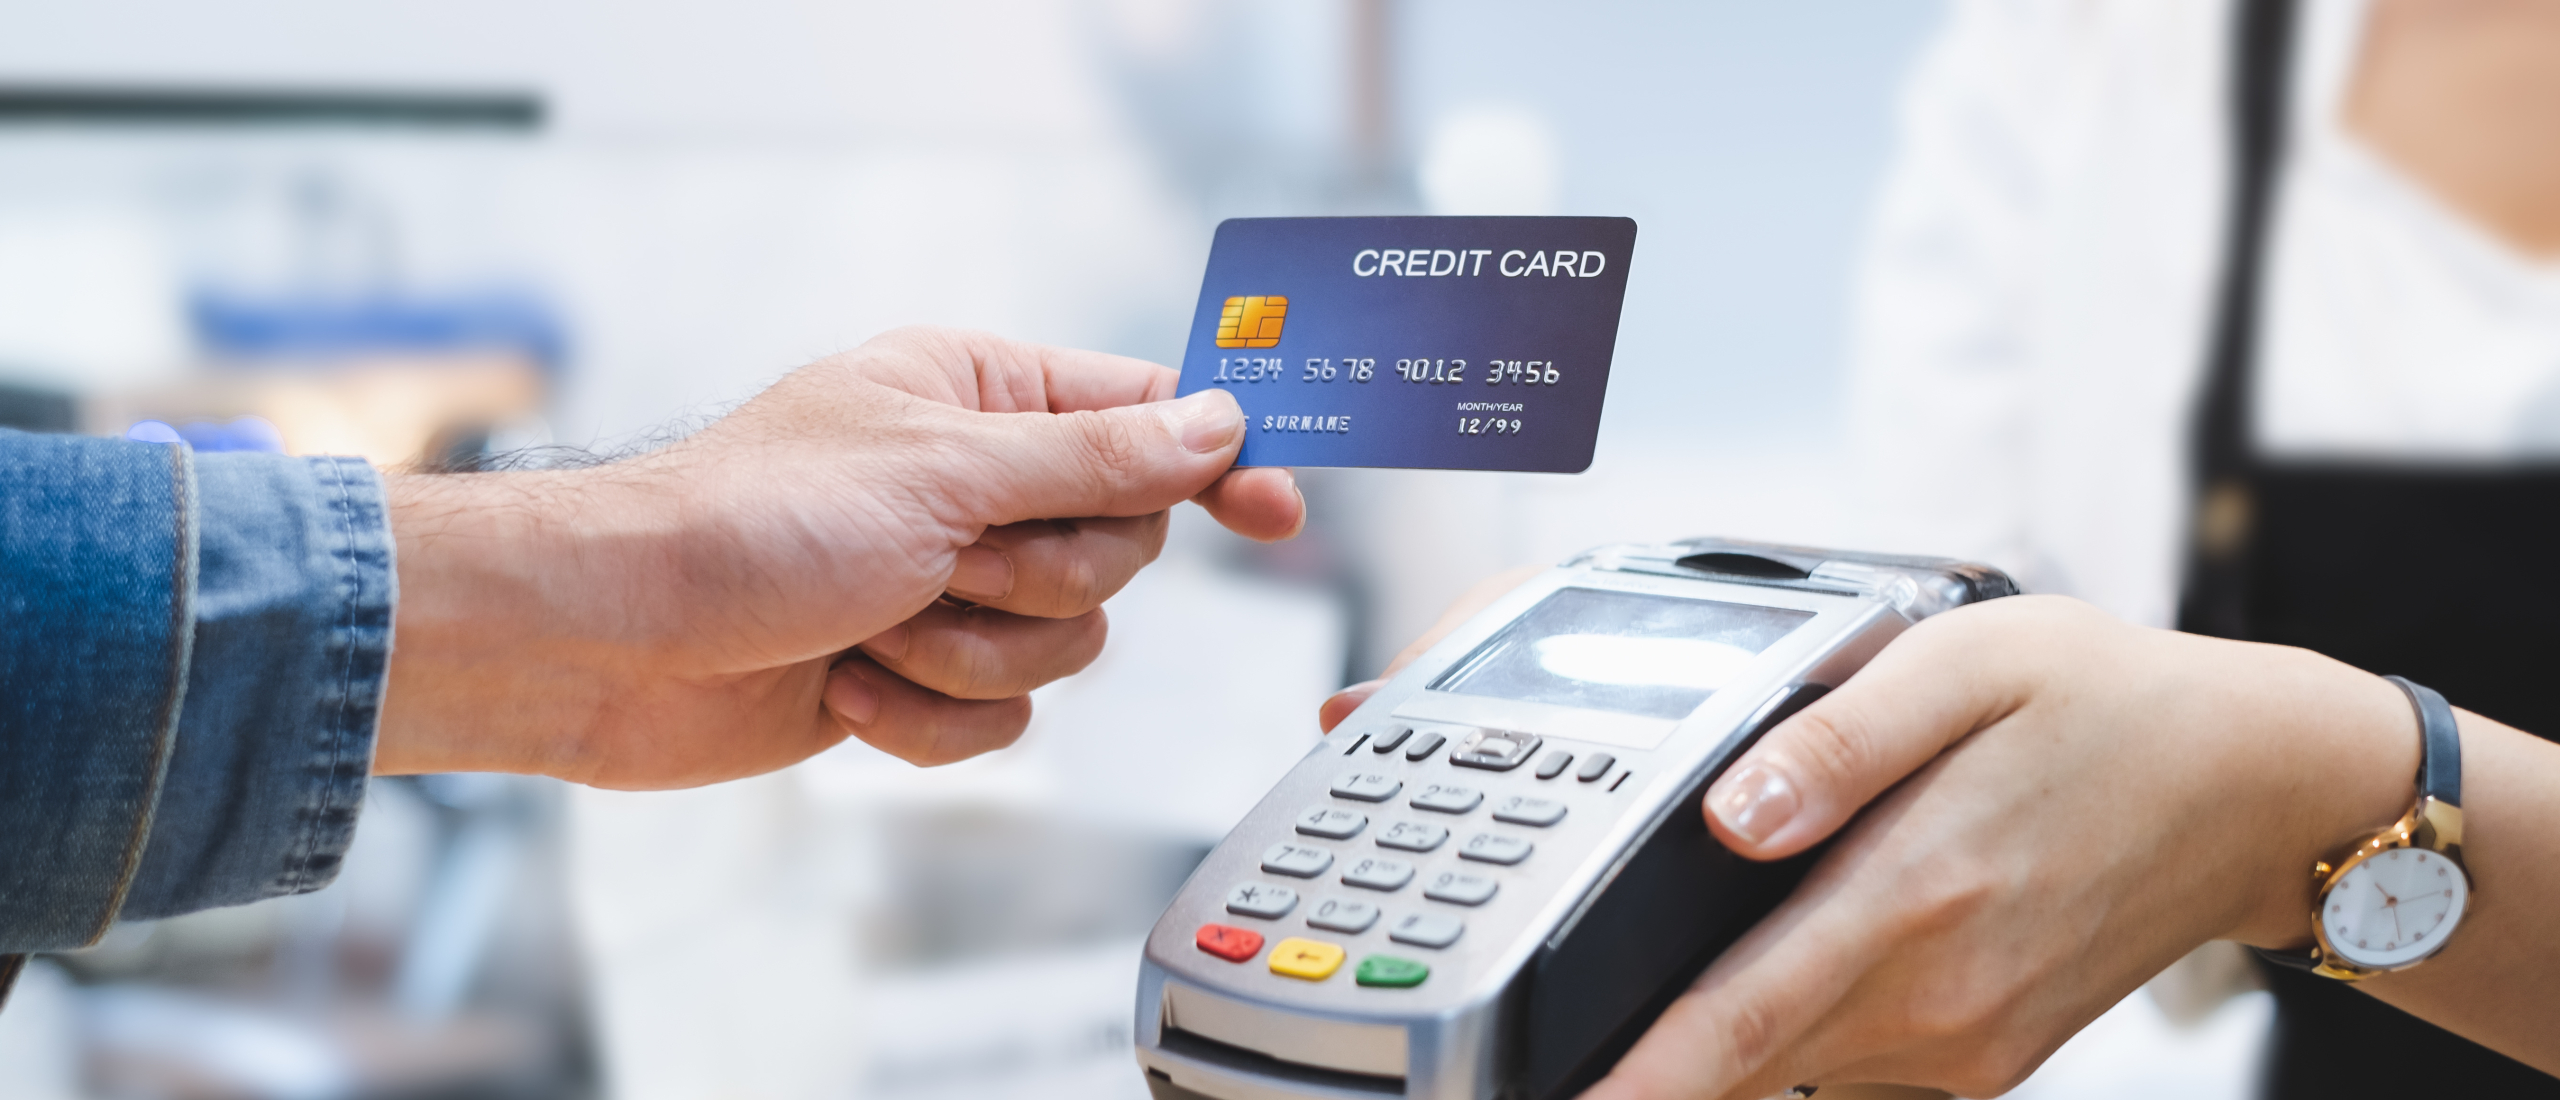 De debitcard in crisistijd